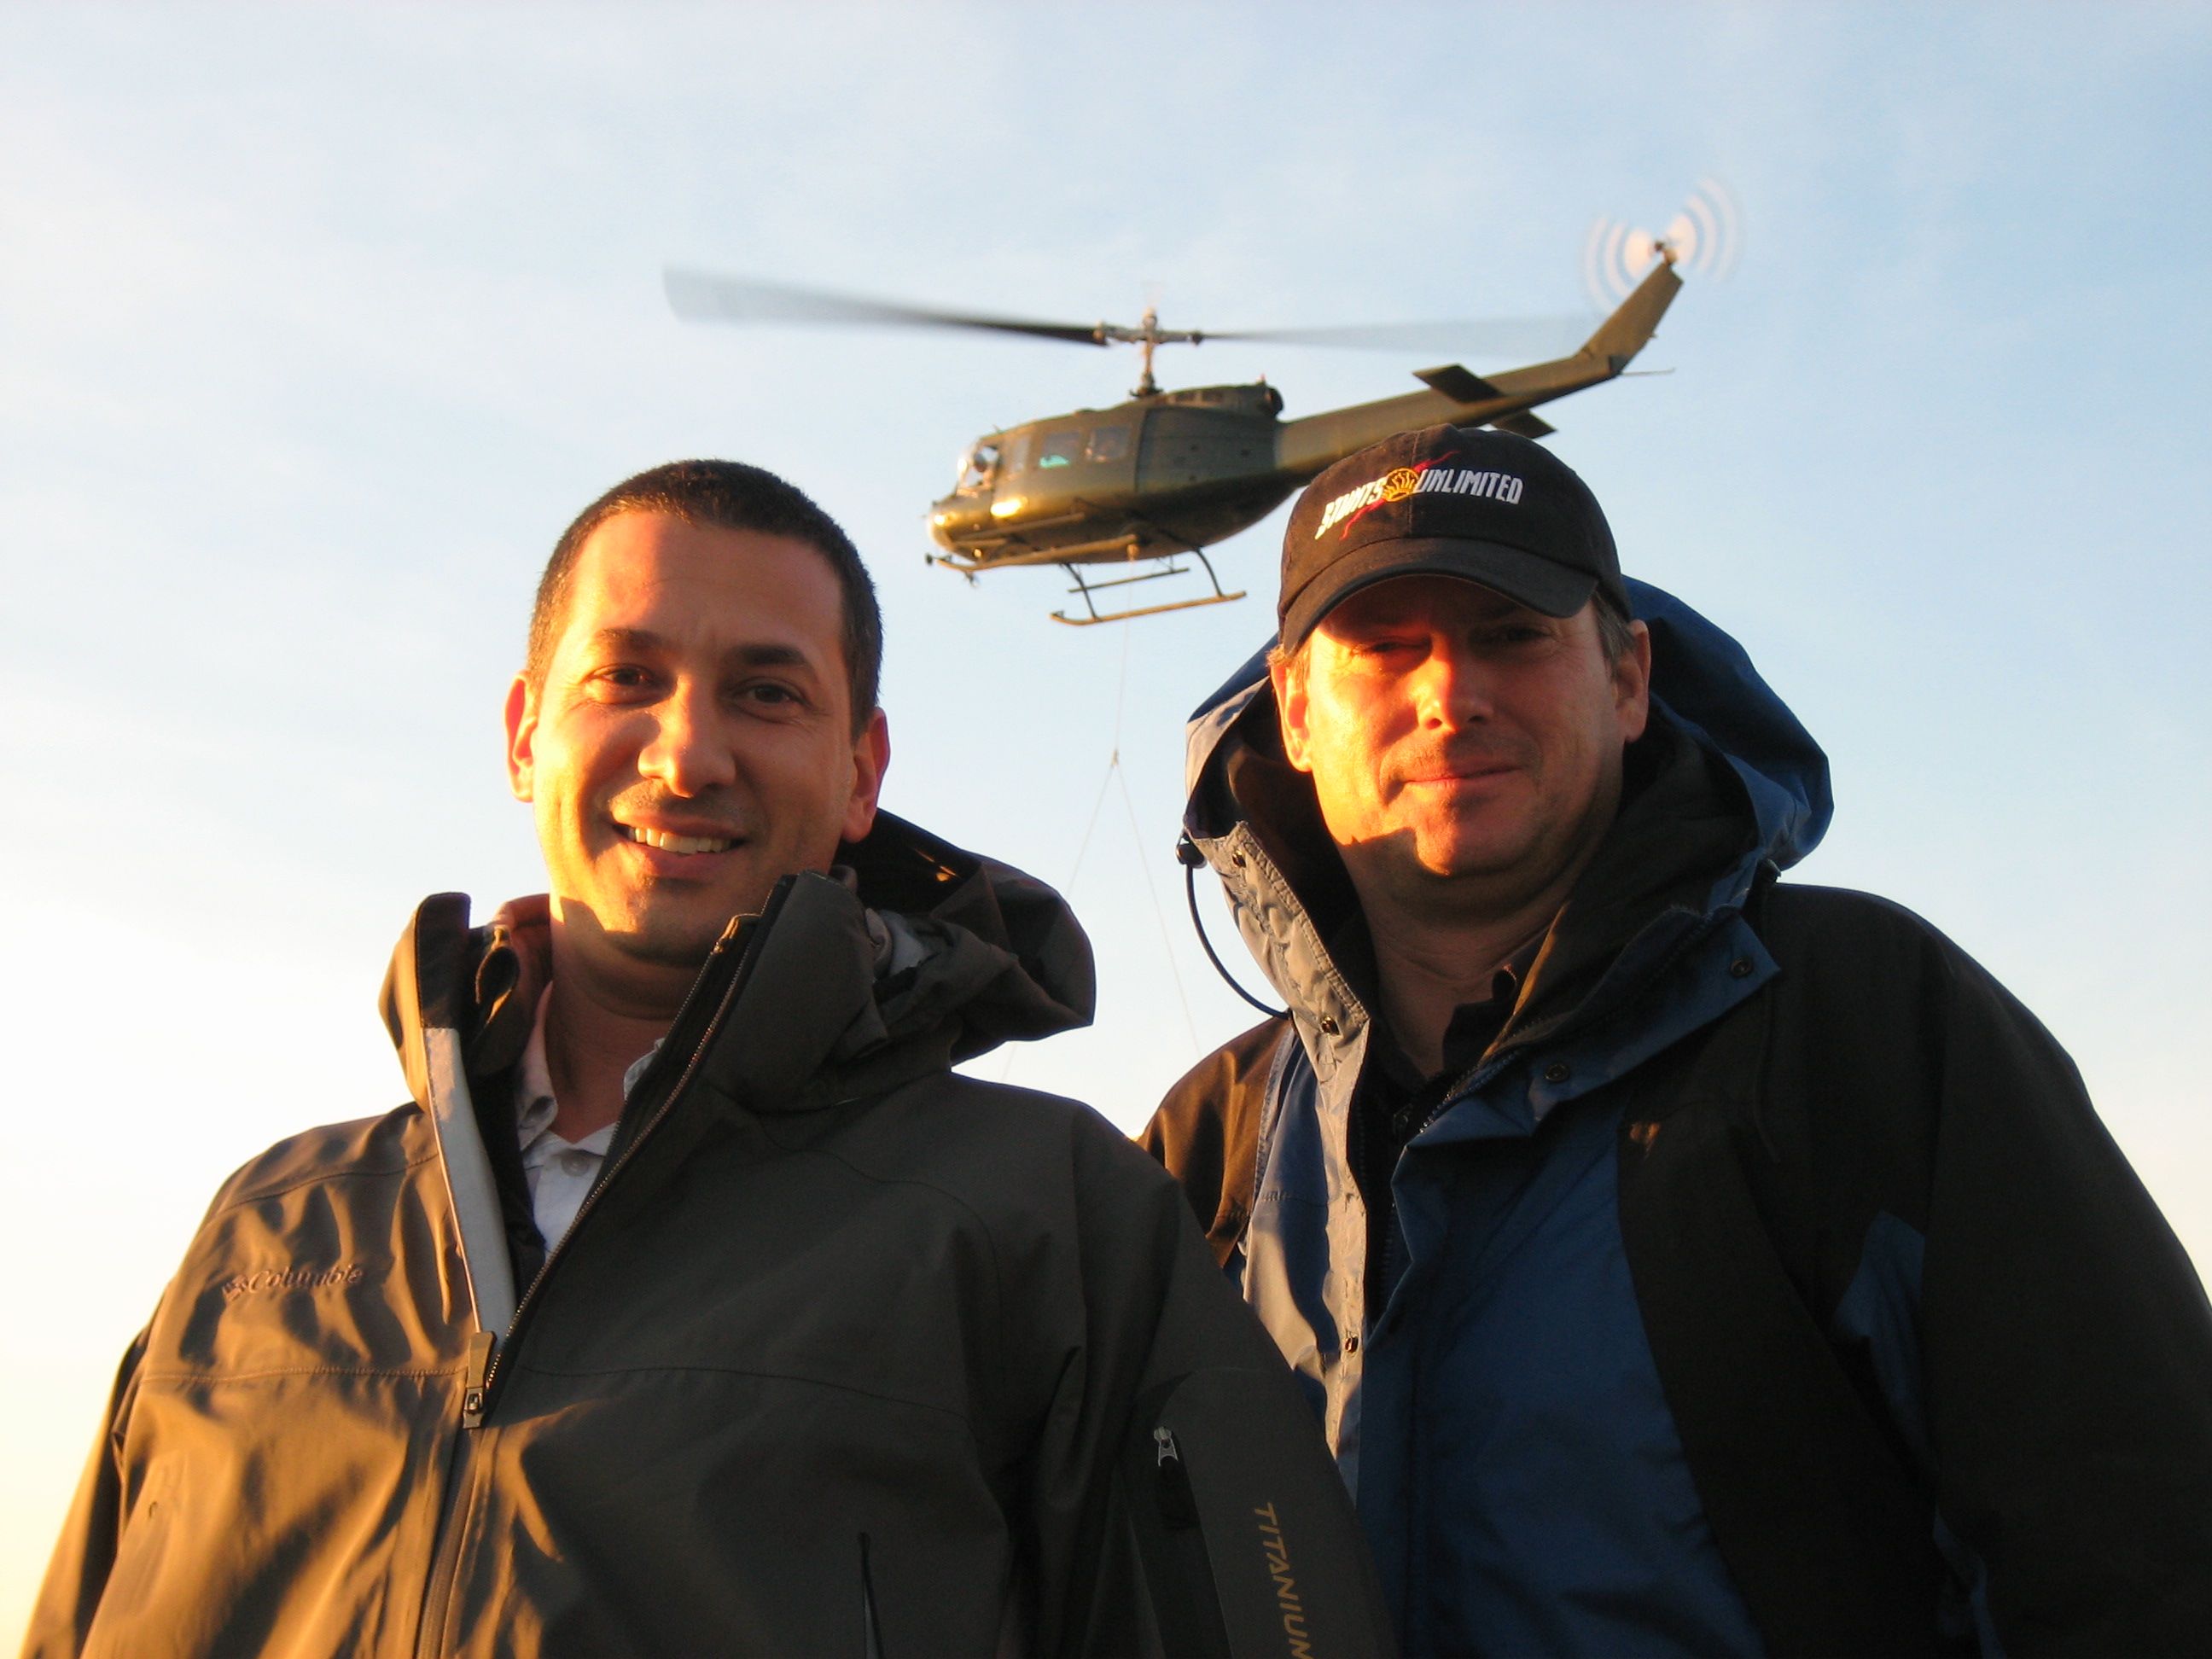 With Matt Kunitz, Executive Producer of Fear Factor